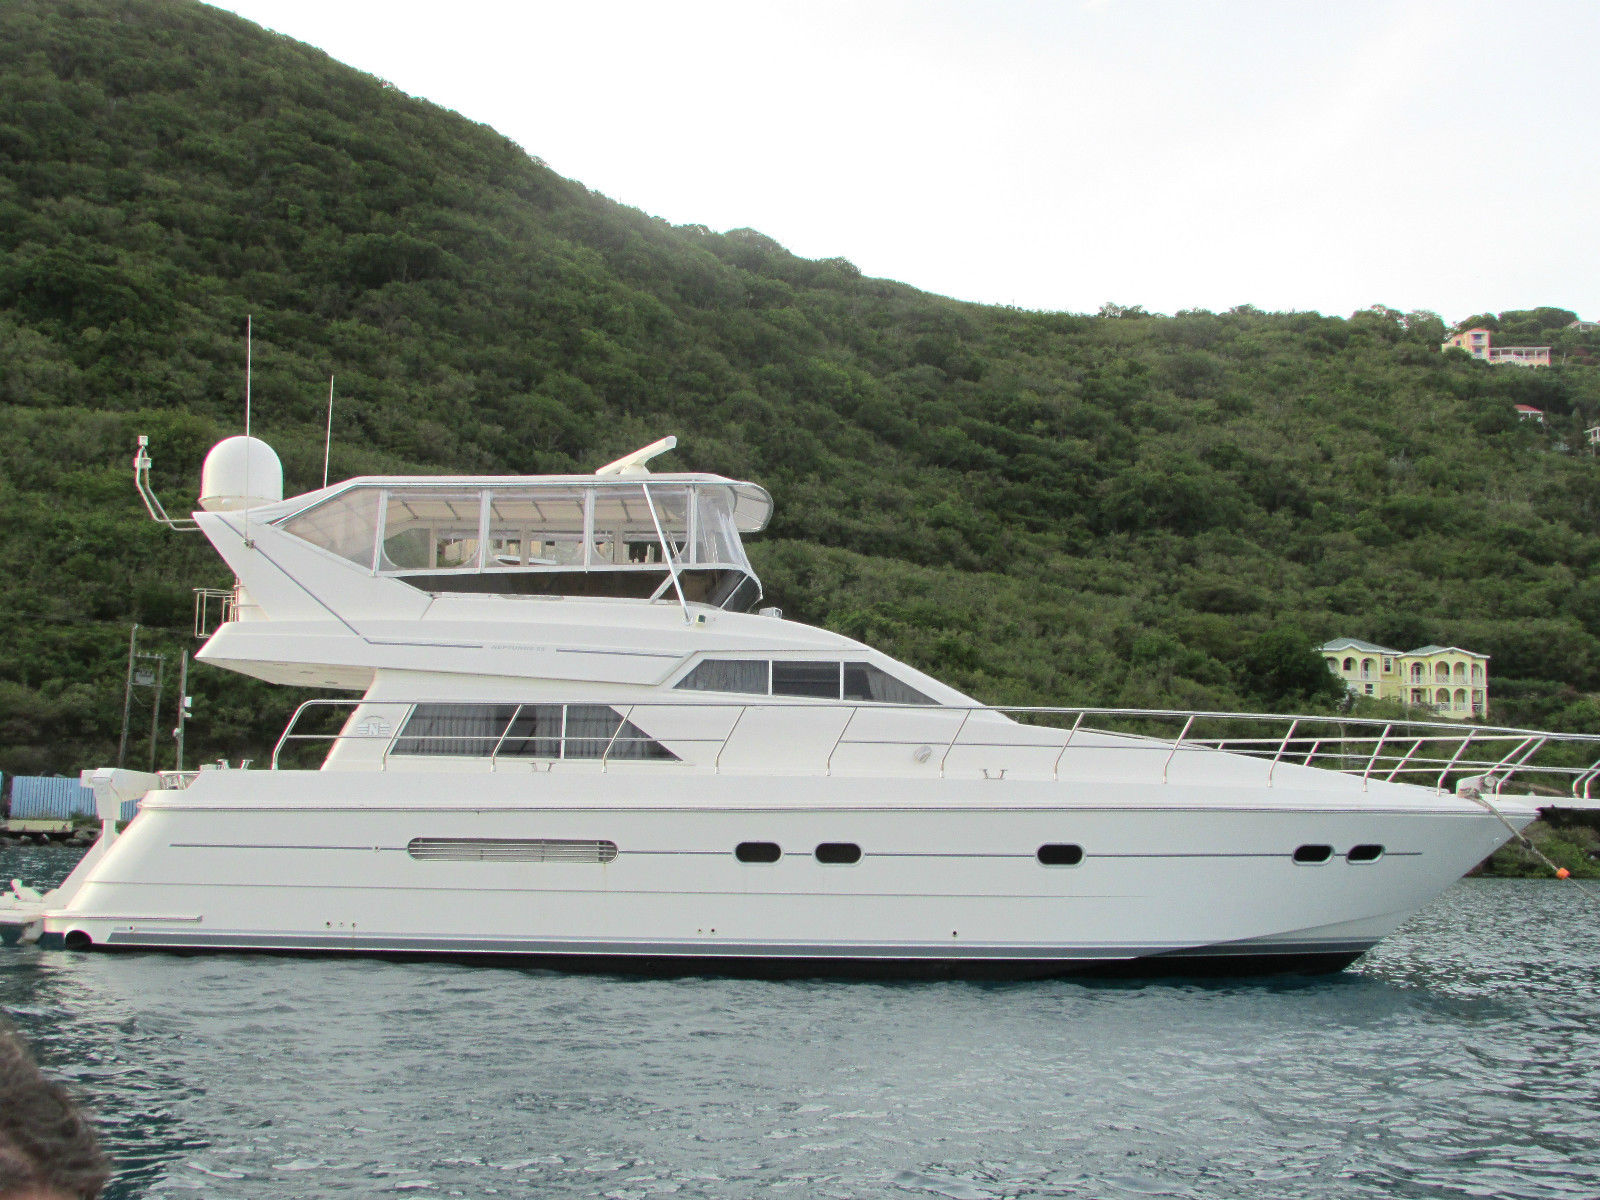 55 foot ocean yacht